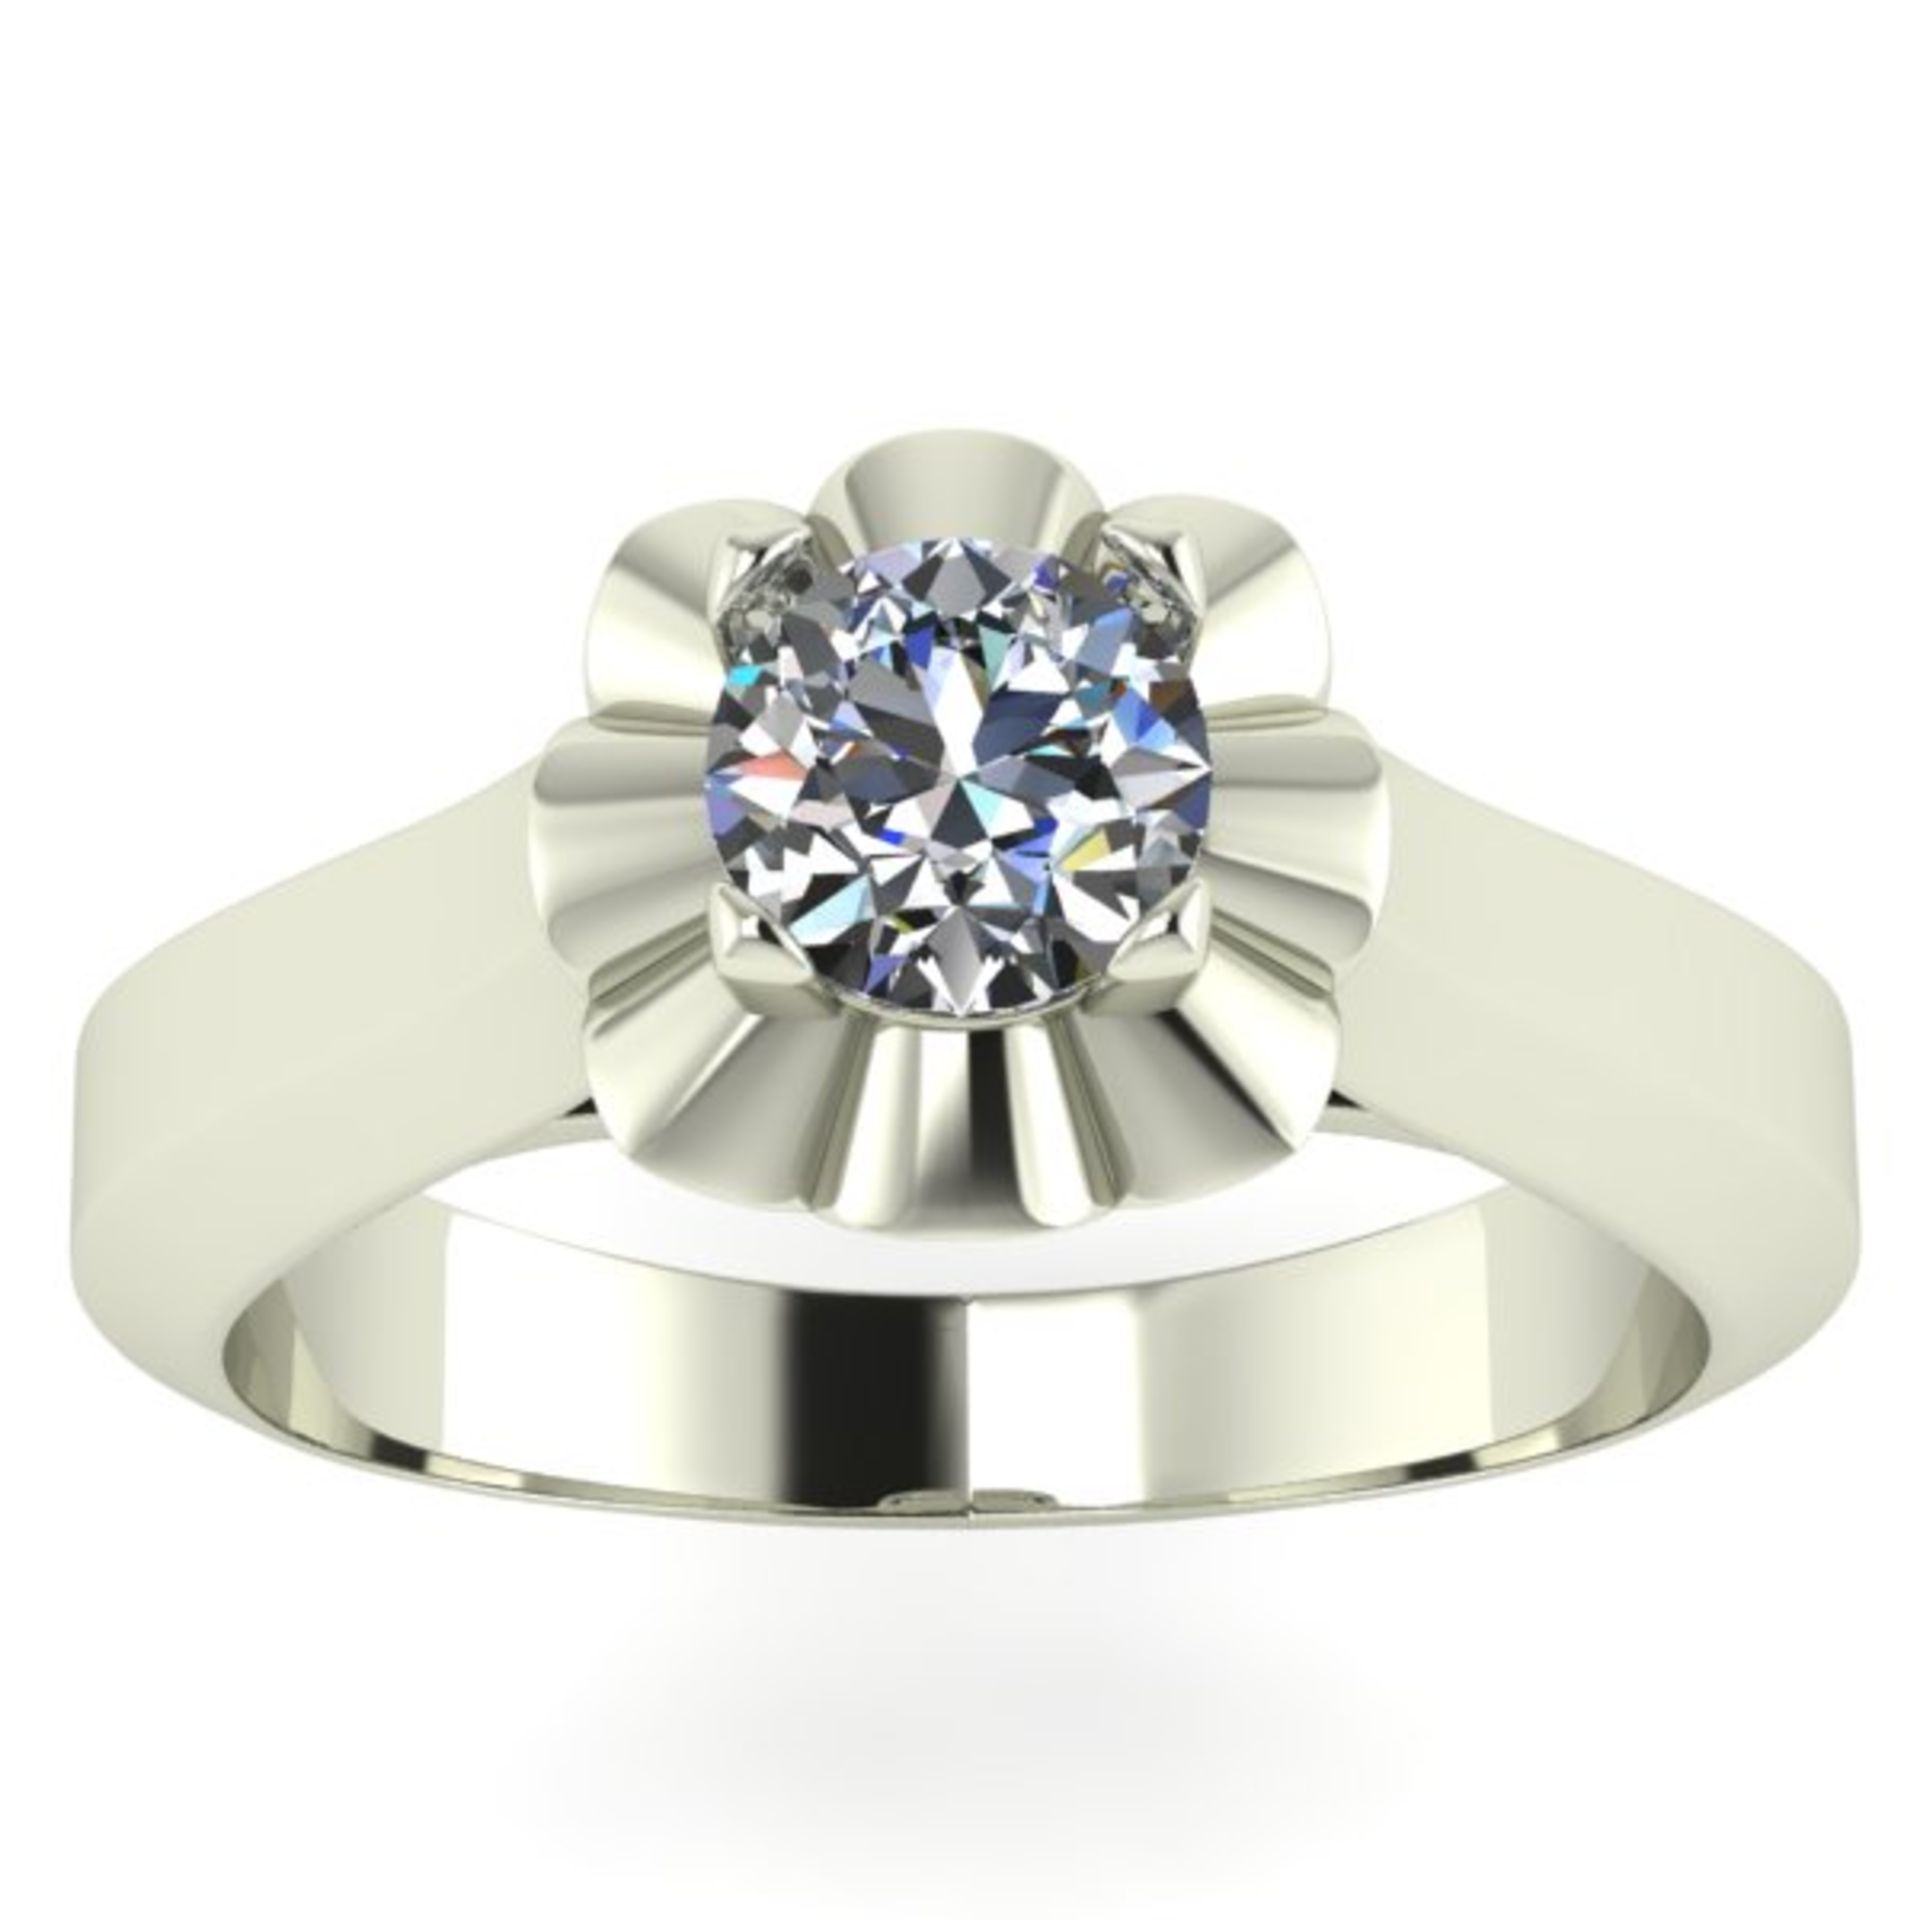 14 K / 585 White Gold Diamond Ring - Image 2 of 4